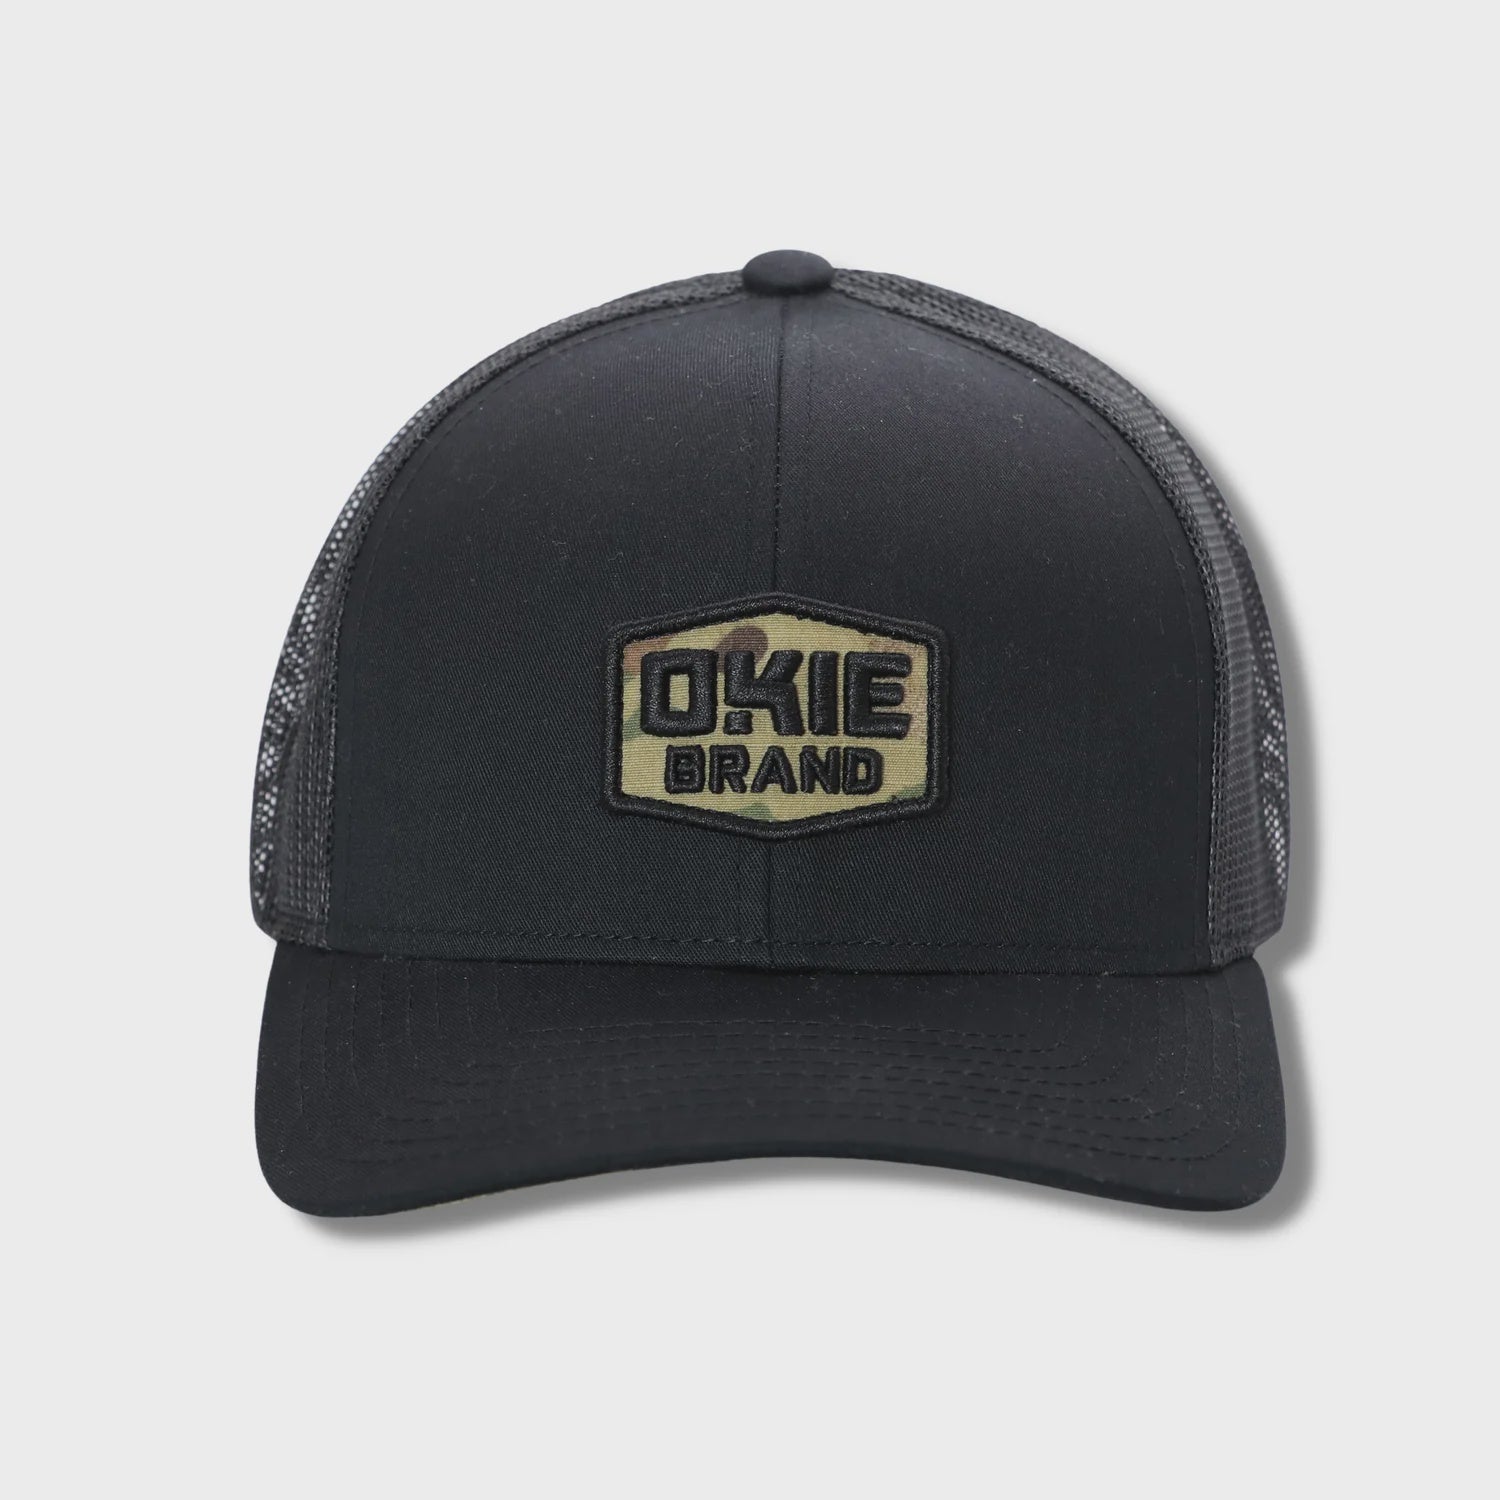 Garth-Black Hat with Black Mesh (Okie Brand Logo)